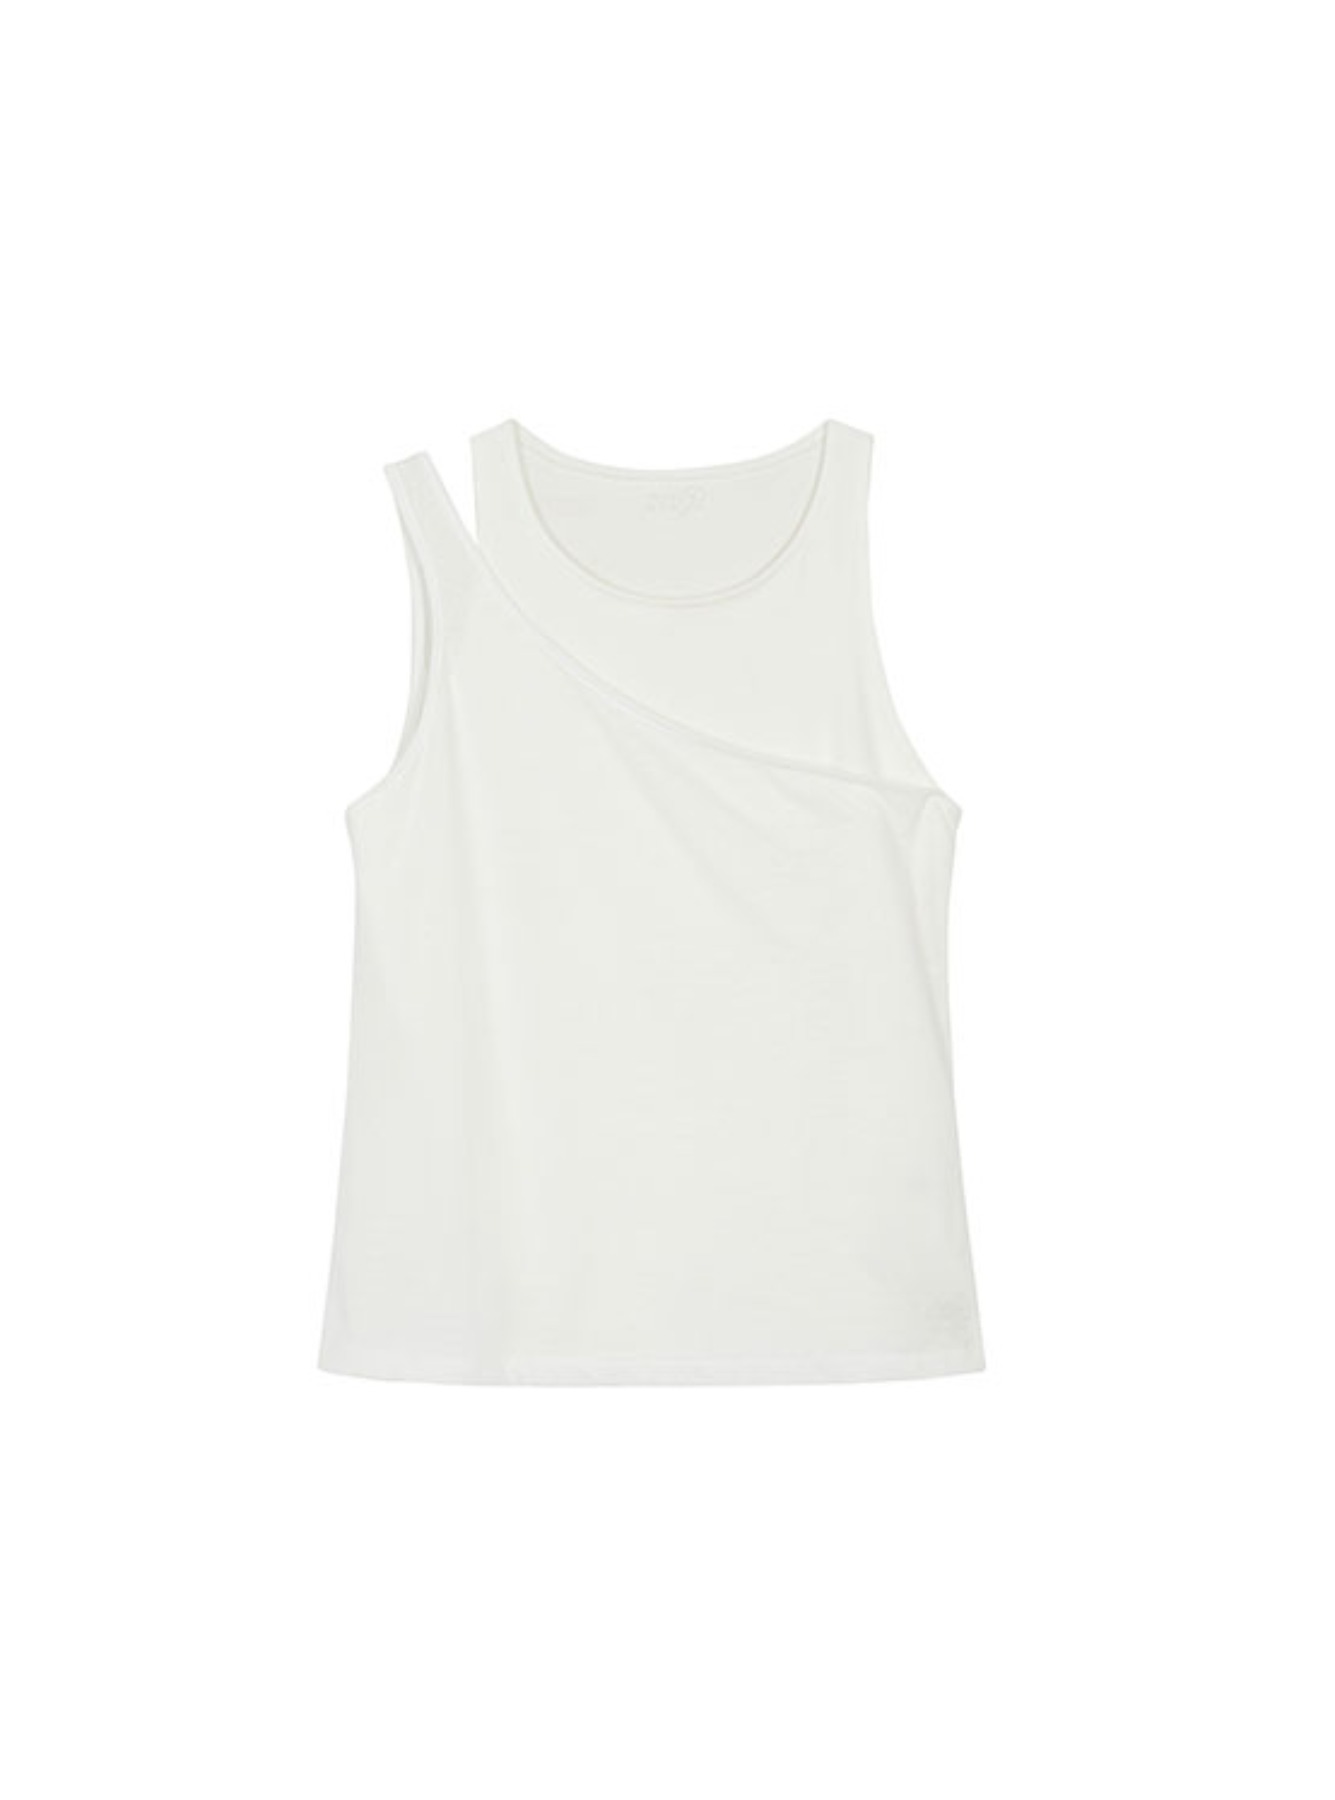 Double Sleeveless T-shirt in White VW2ME122-01